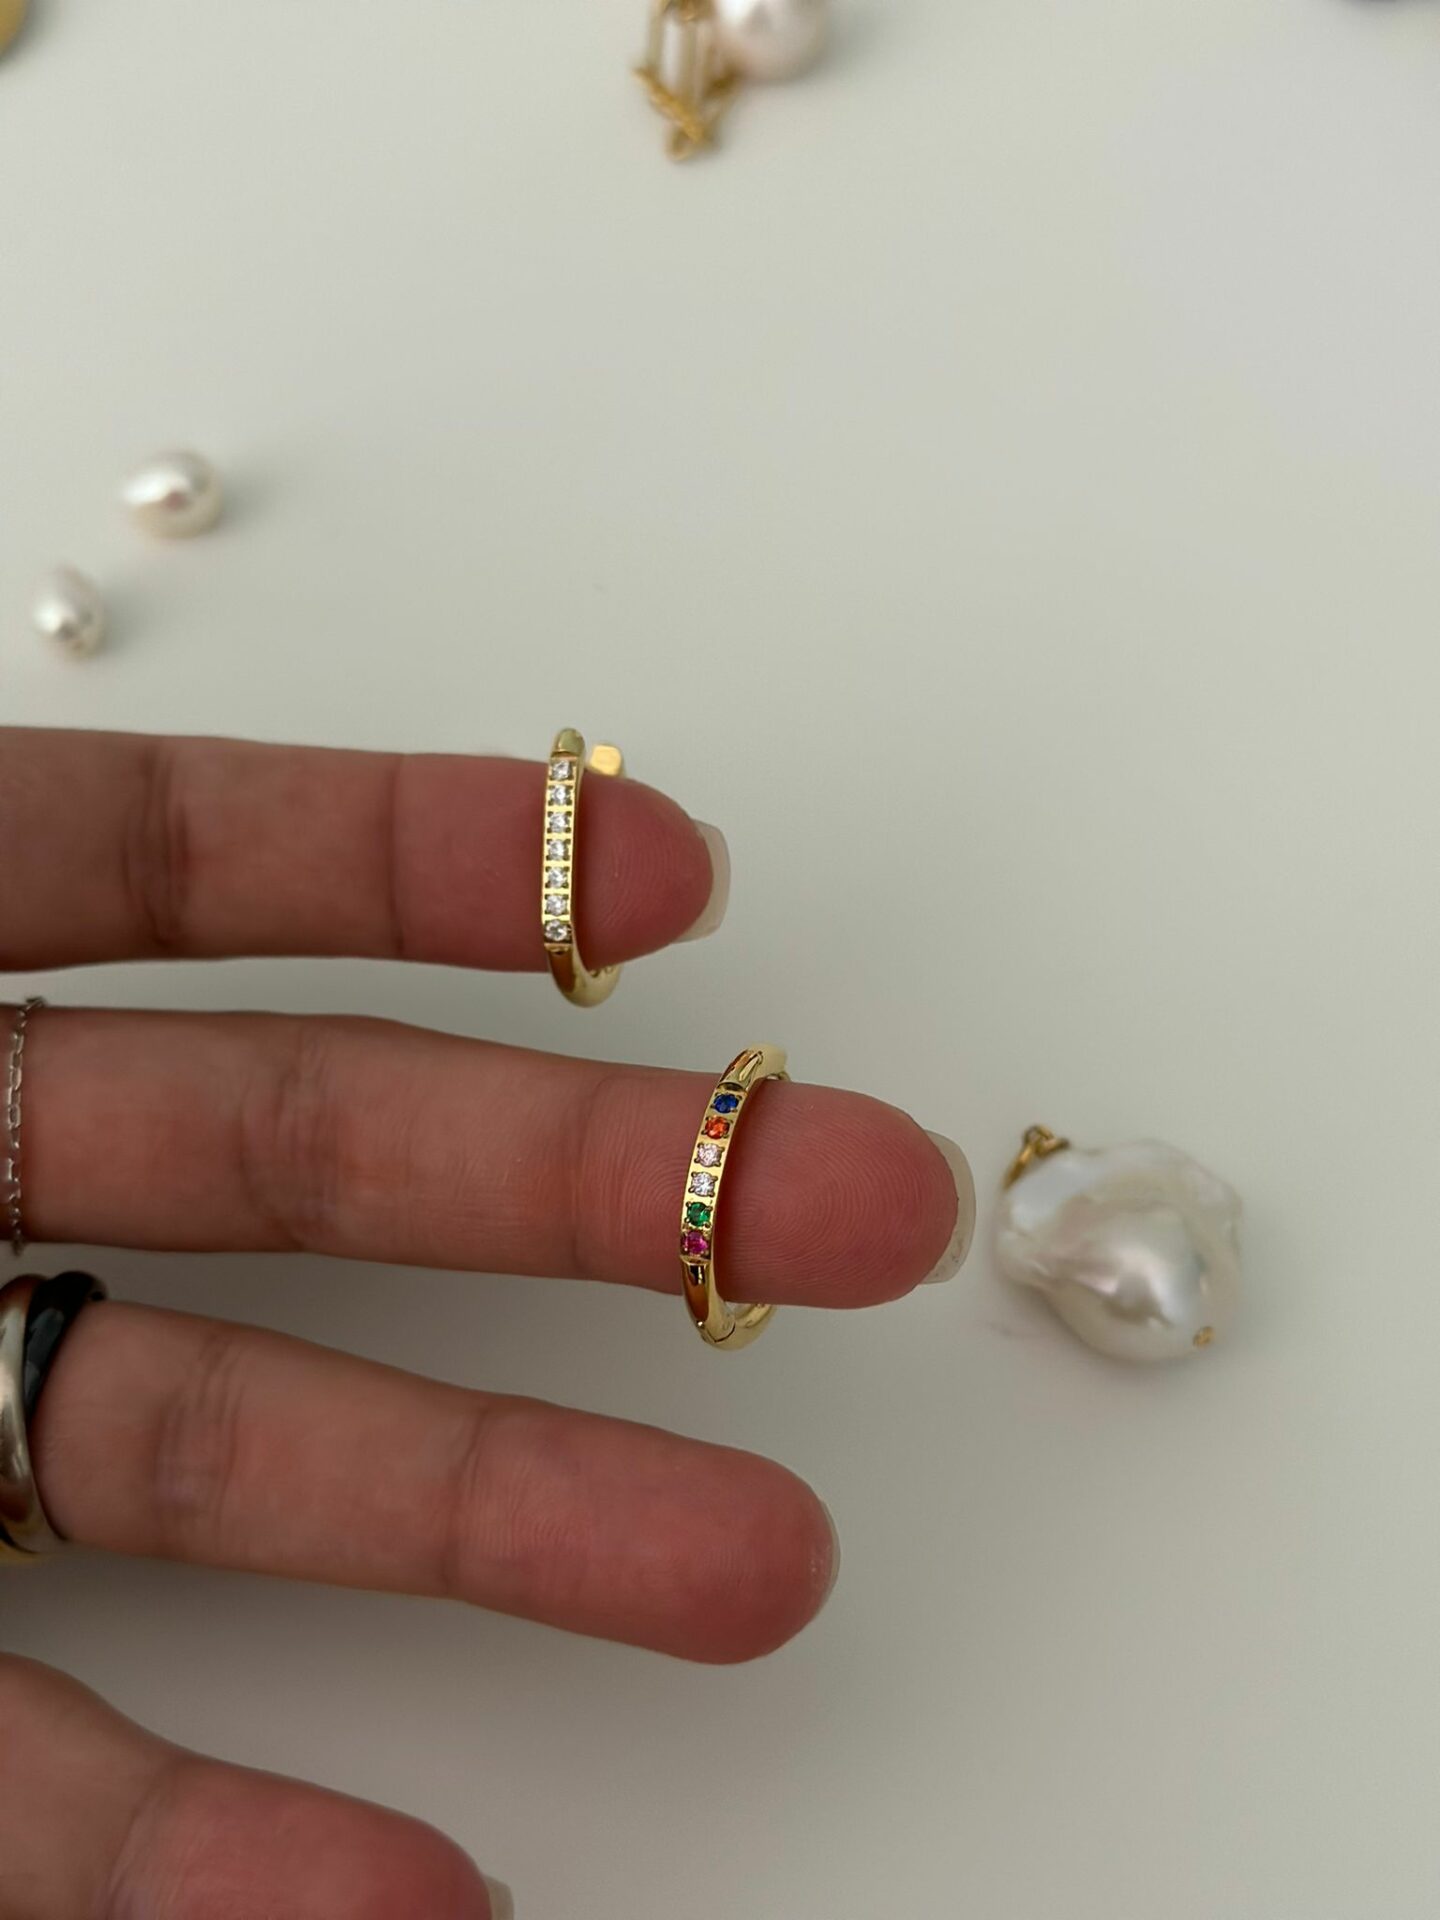 création bijoux perles de culture, maloa pearl, bijoux acier inoxydable et perles, sur mesure, bijoux en perles et acier inoxydable